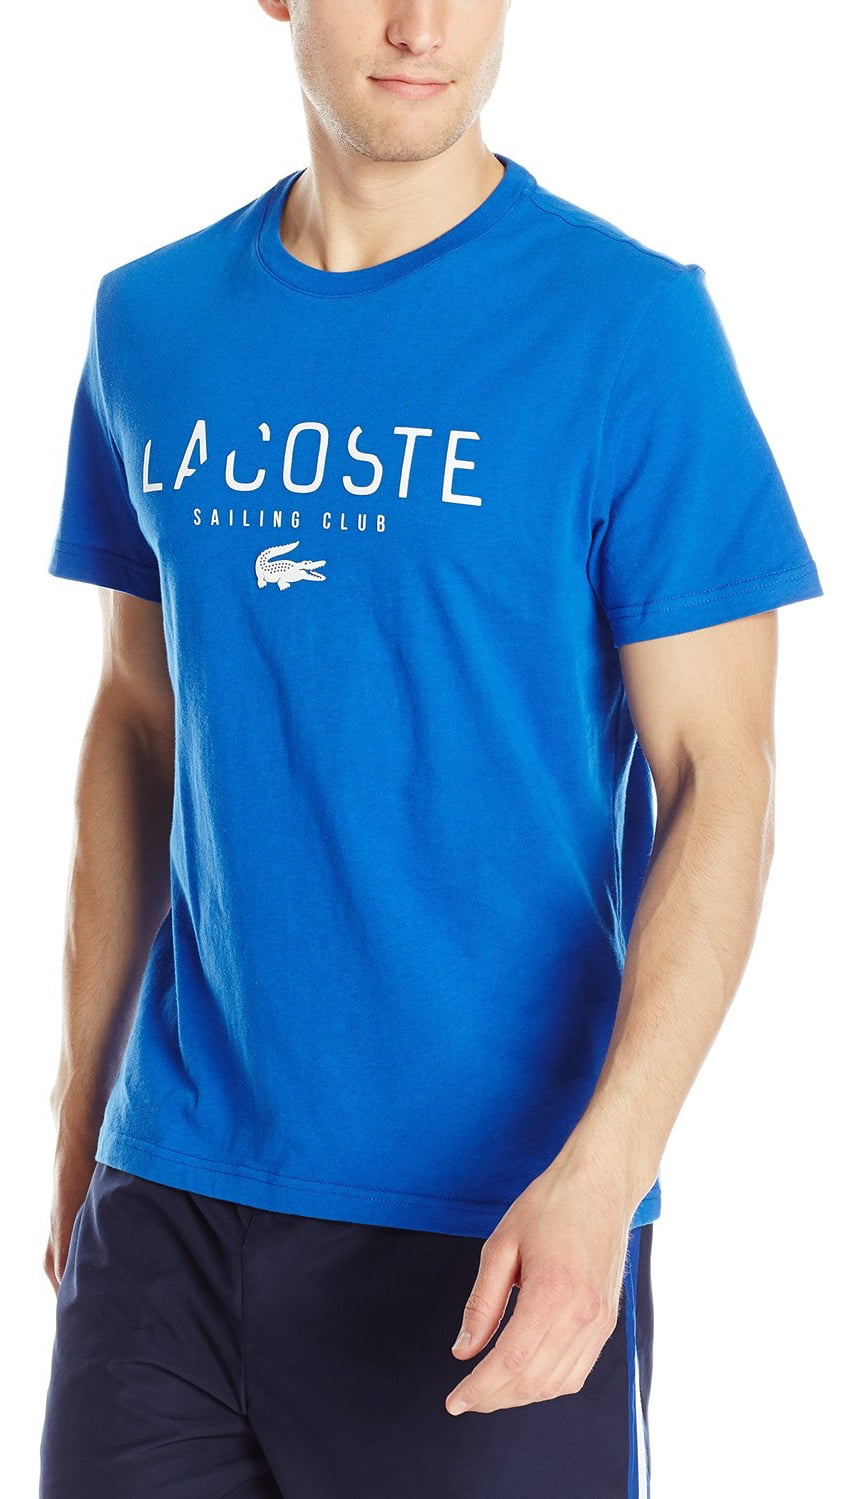 Lacoste Men's Short Sleeve Sailing Club T-Shirt Delta Blue Size XX ...